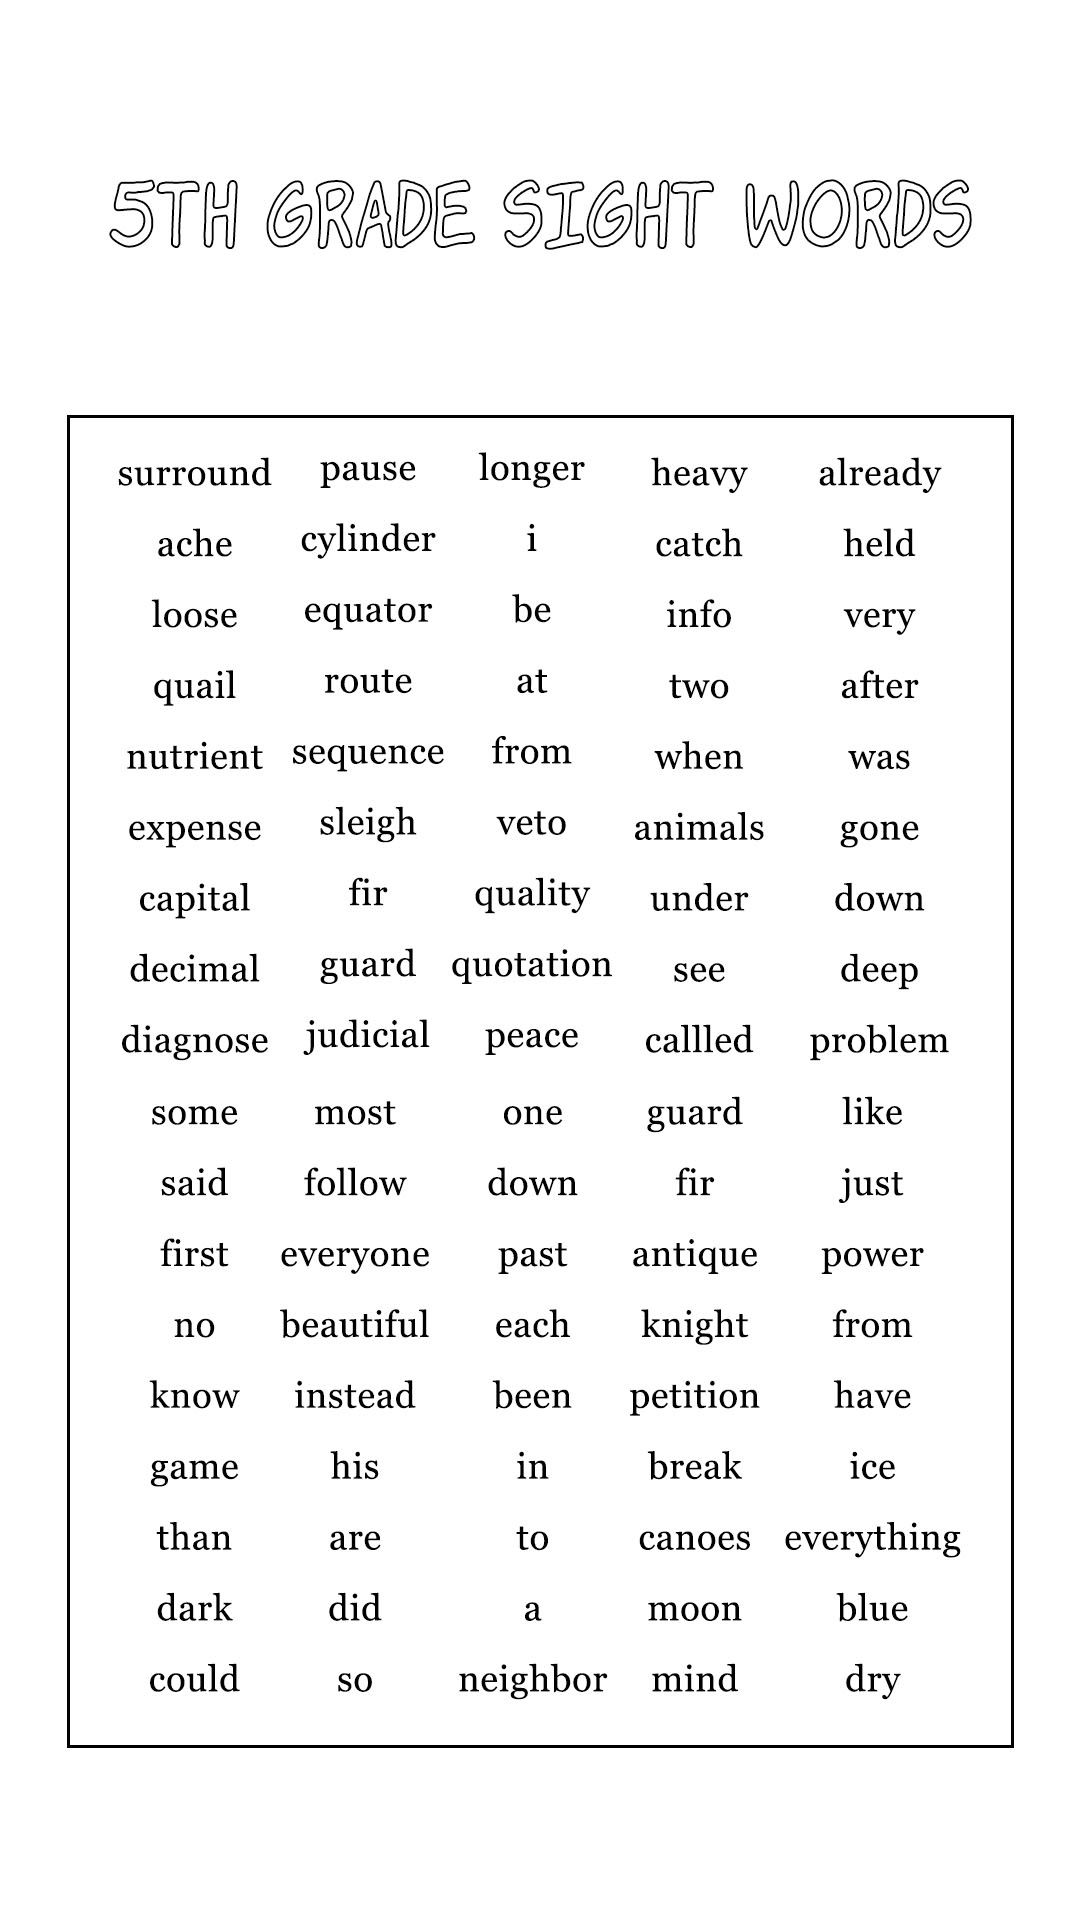 Fifth Grade Sight Words List Image